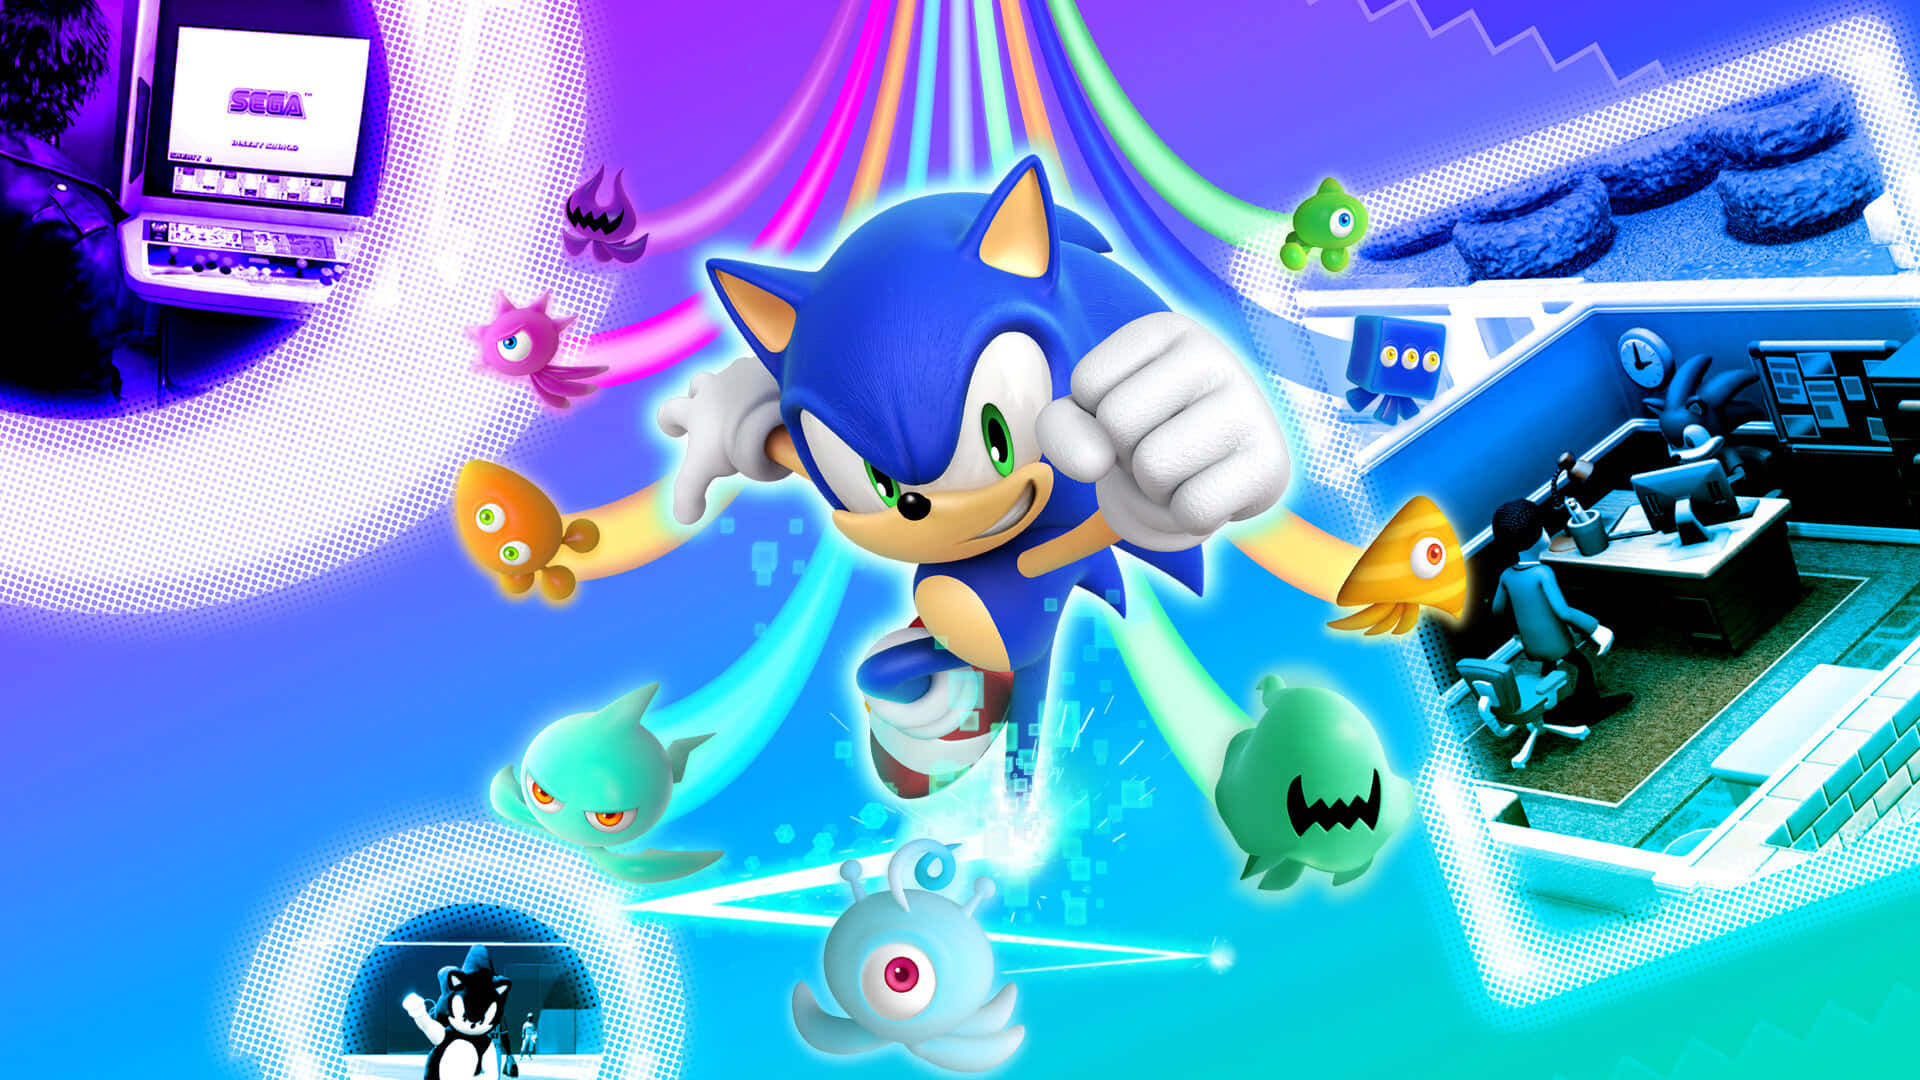 Fondosde Pantalla De Sonic The Hedgehog Fondo de pantalla